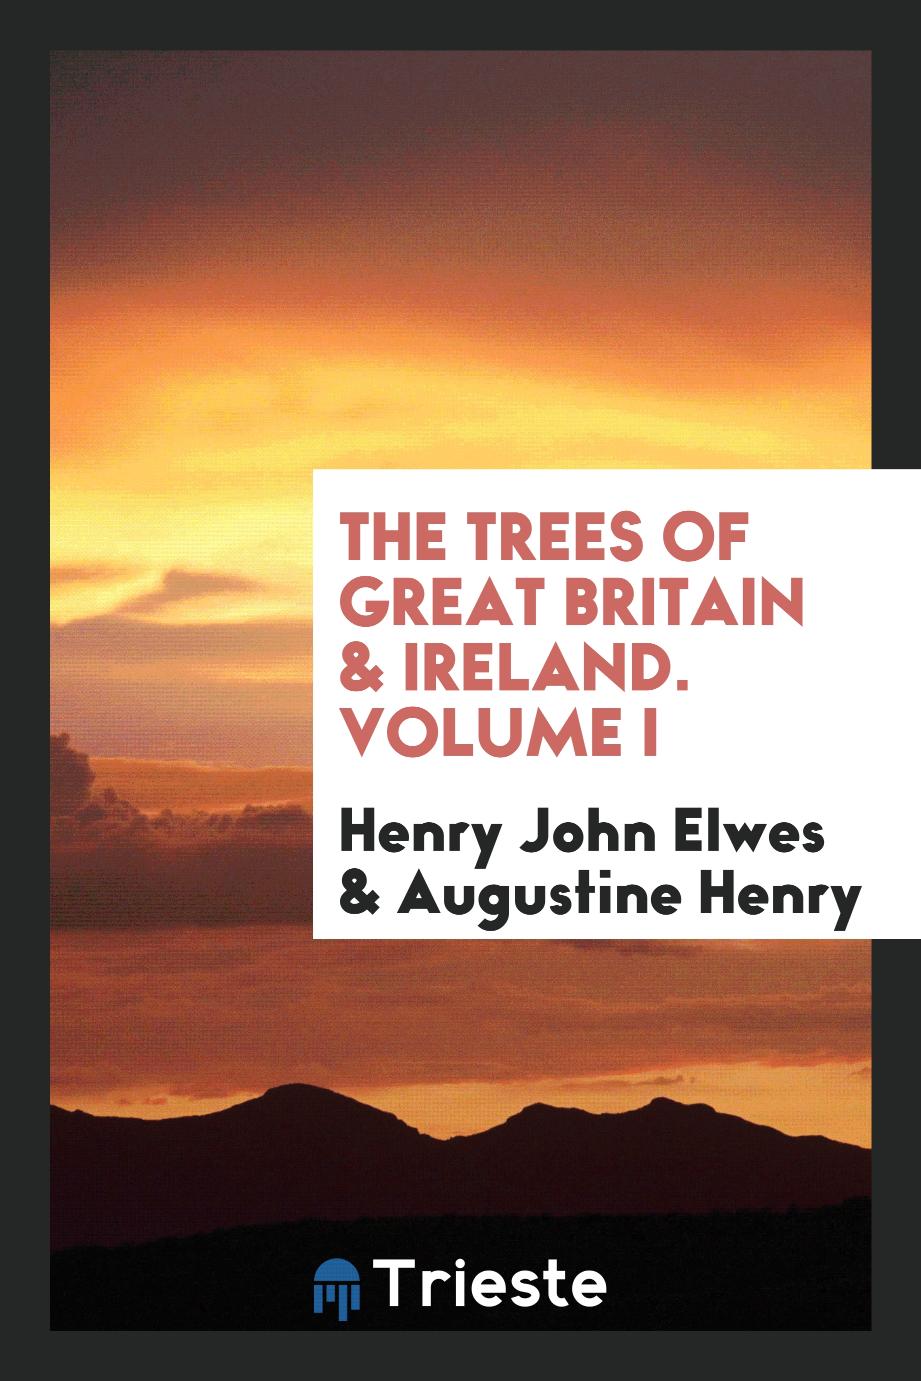 The trees of Great Britain & Ireland. Volume I